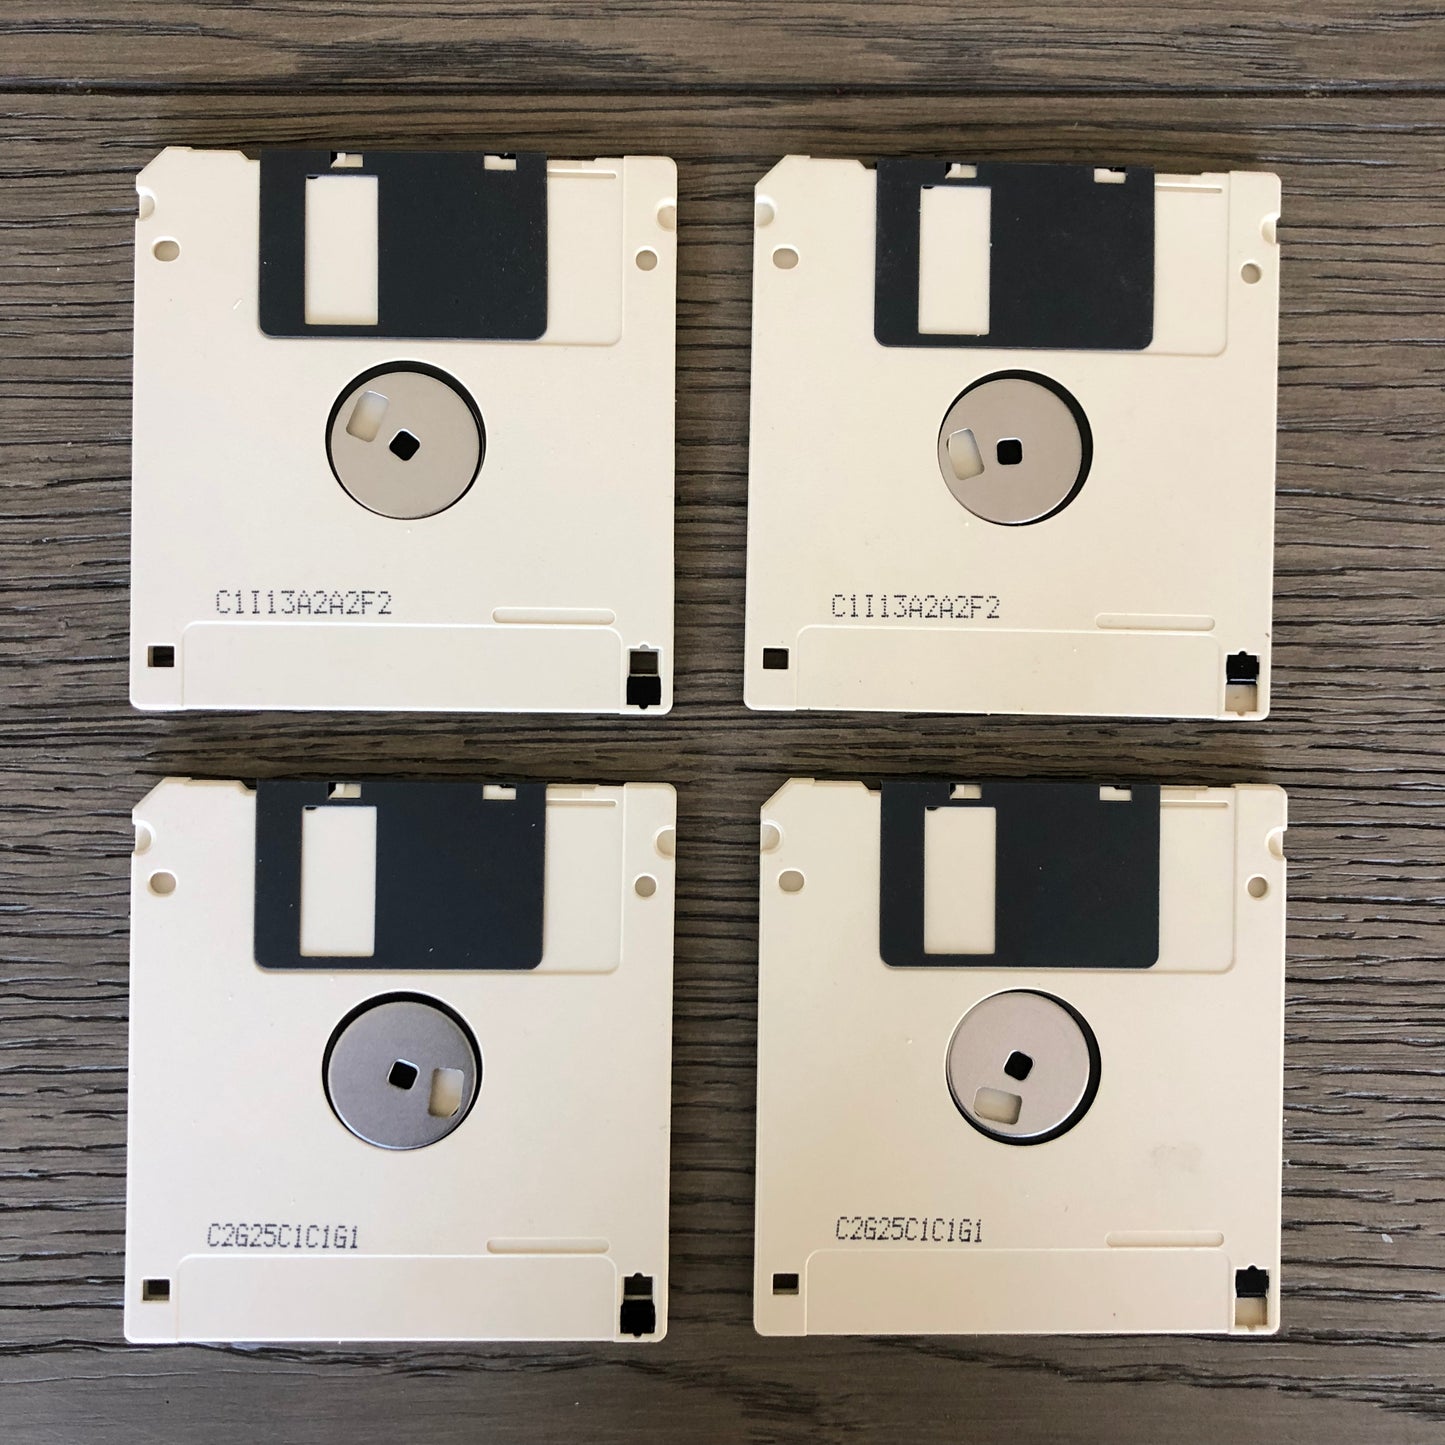 Floppy Disk Coaster Set